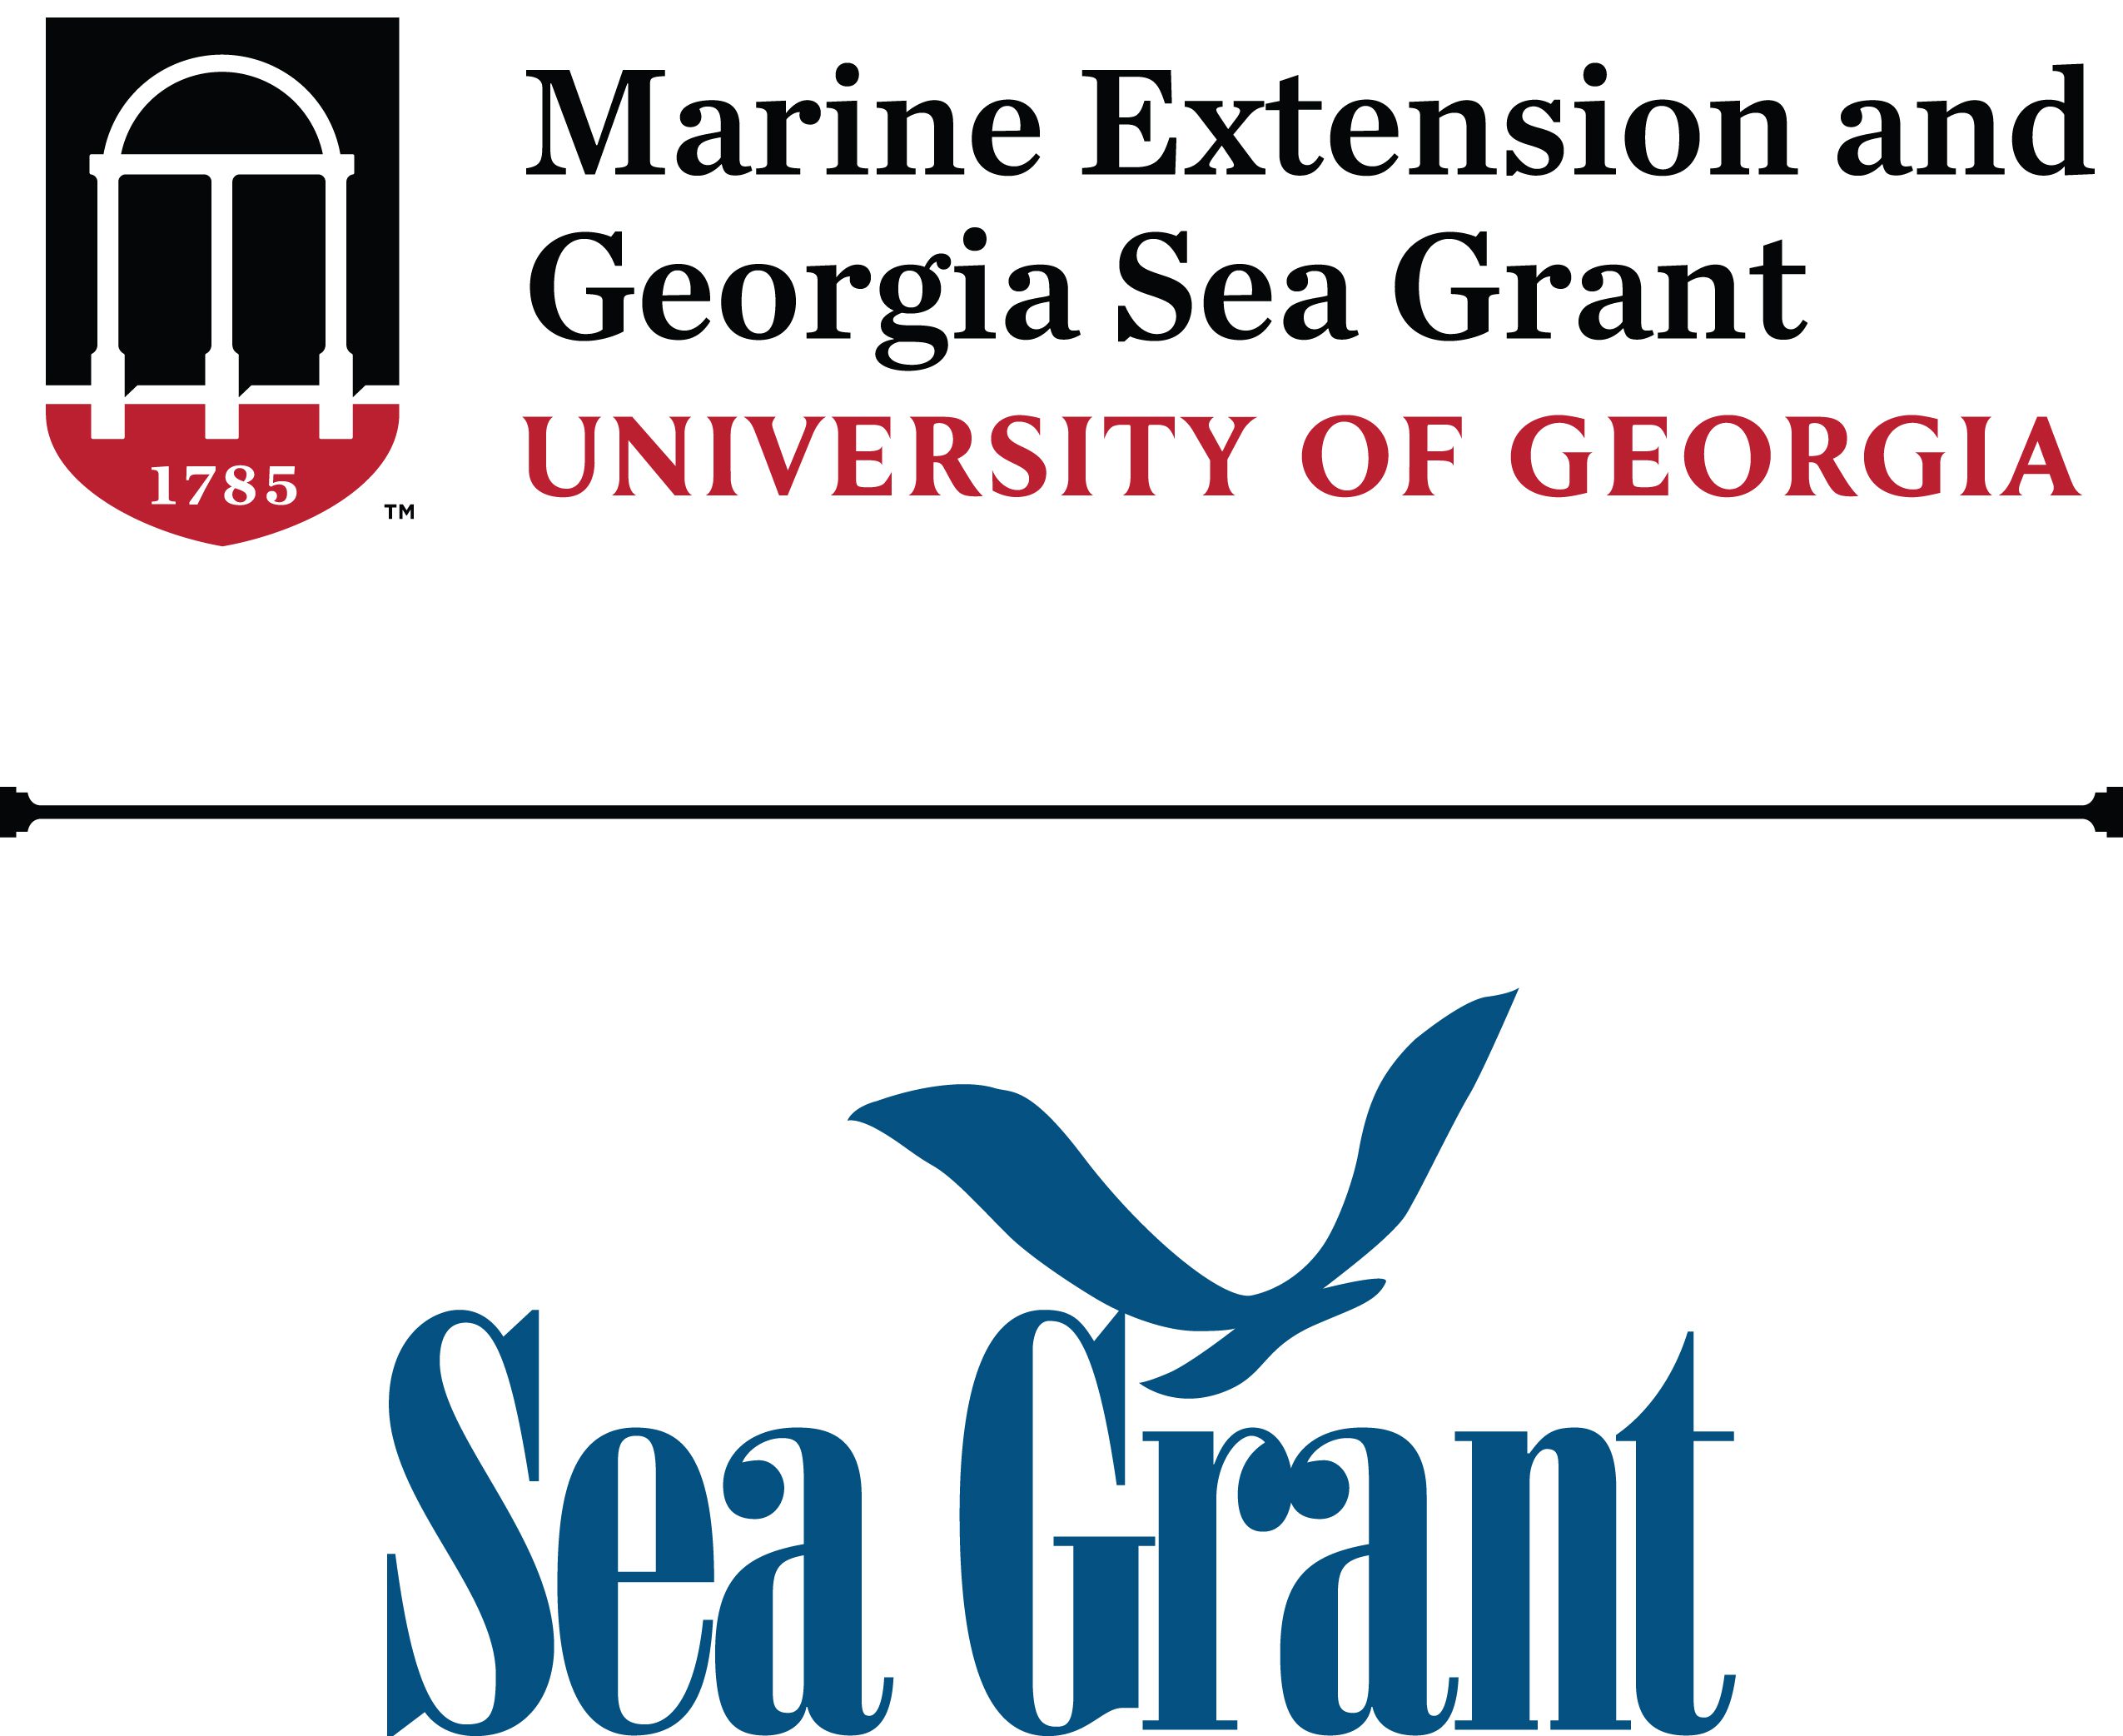 University of Georgia Marine Extension and Georgia Sea Grant